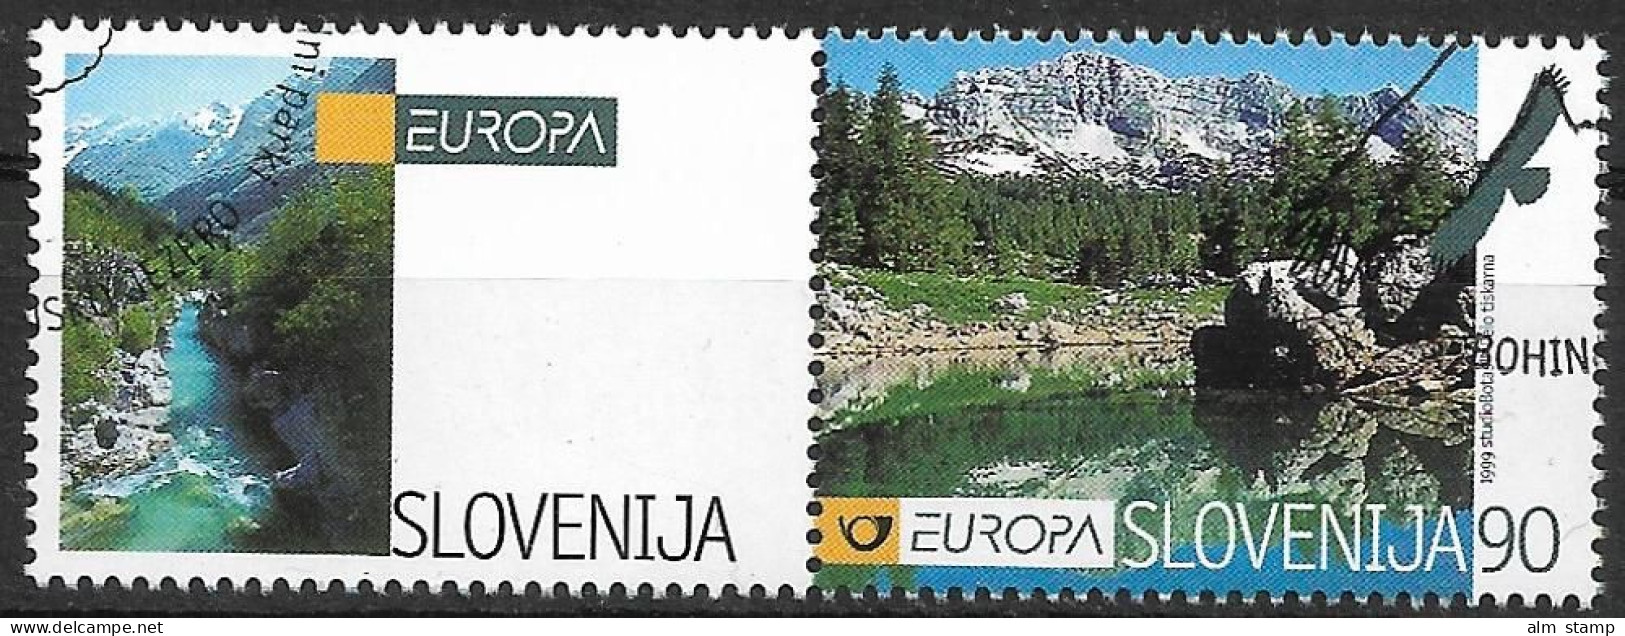 1999 Solwenien Sovenija Mi.259 Used   Europa: Natur- Und Nationalparks - 1999